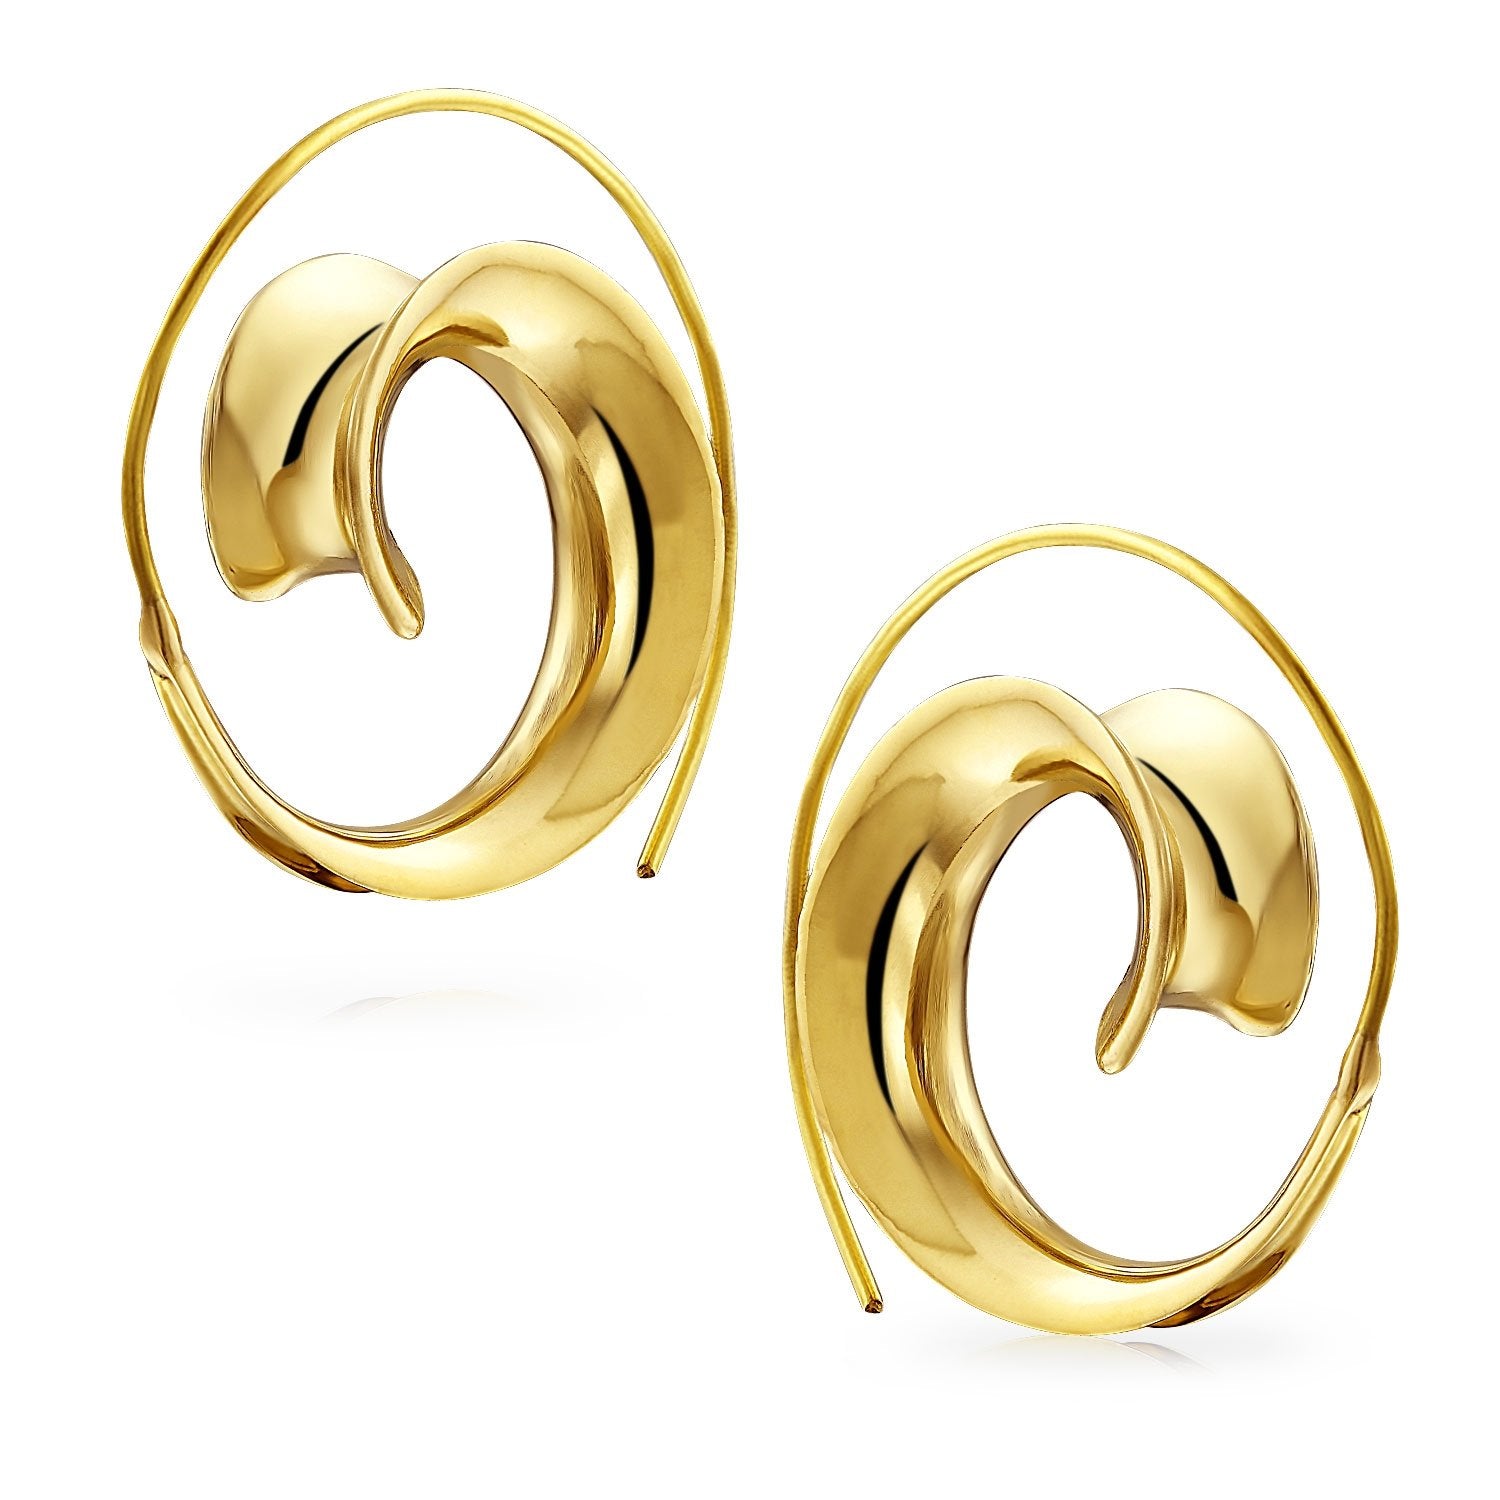 Boho Style Labyrinth Spiral Circle Wave Hoop Earrings Gold Plated - Joyeria Lady